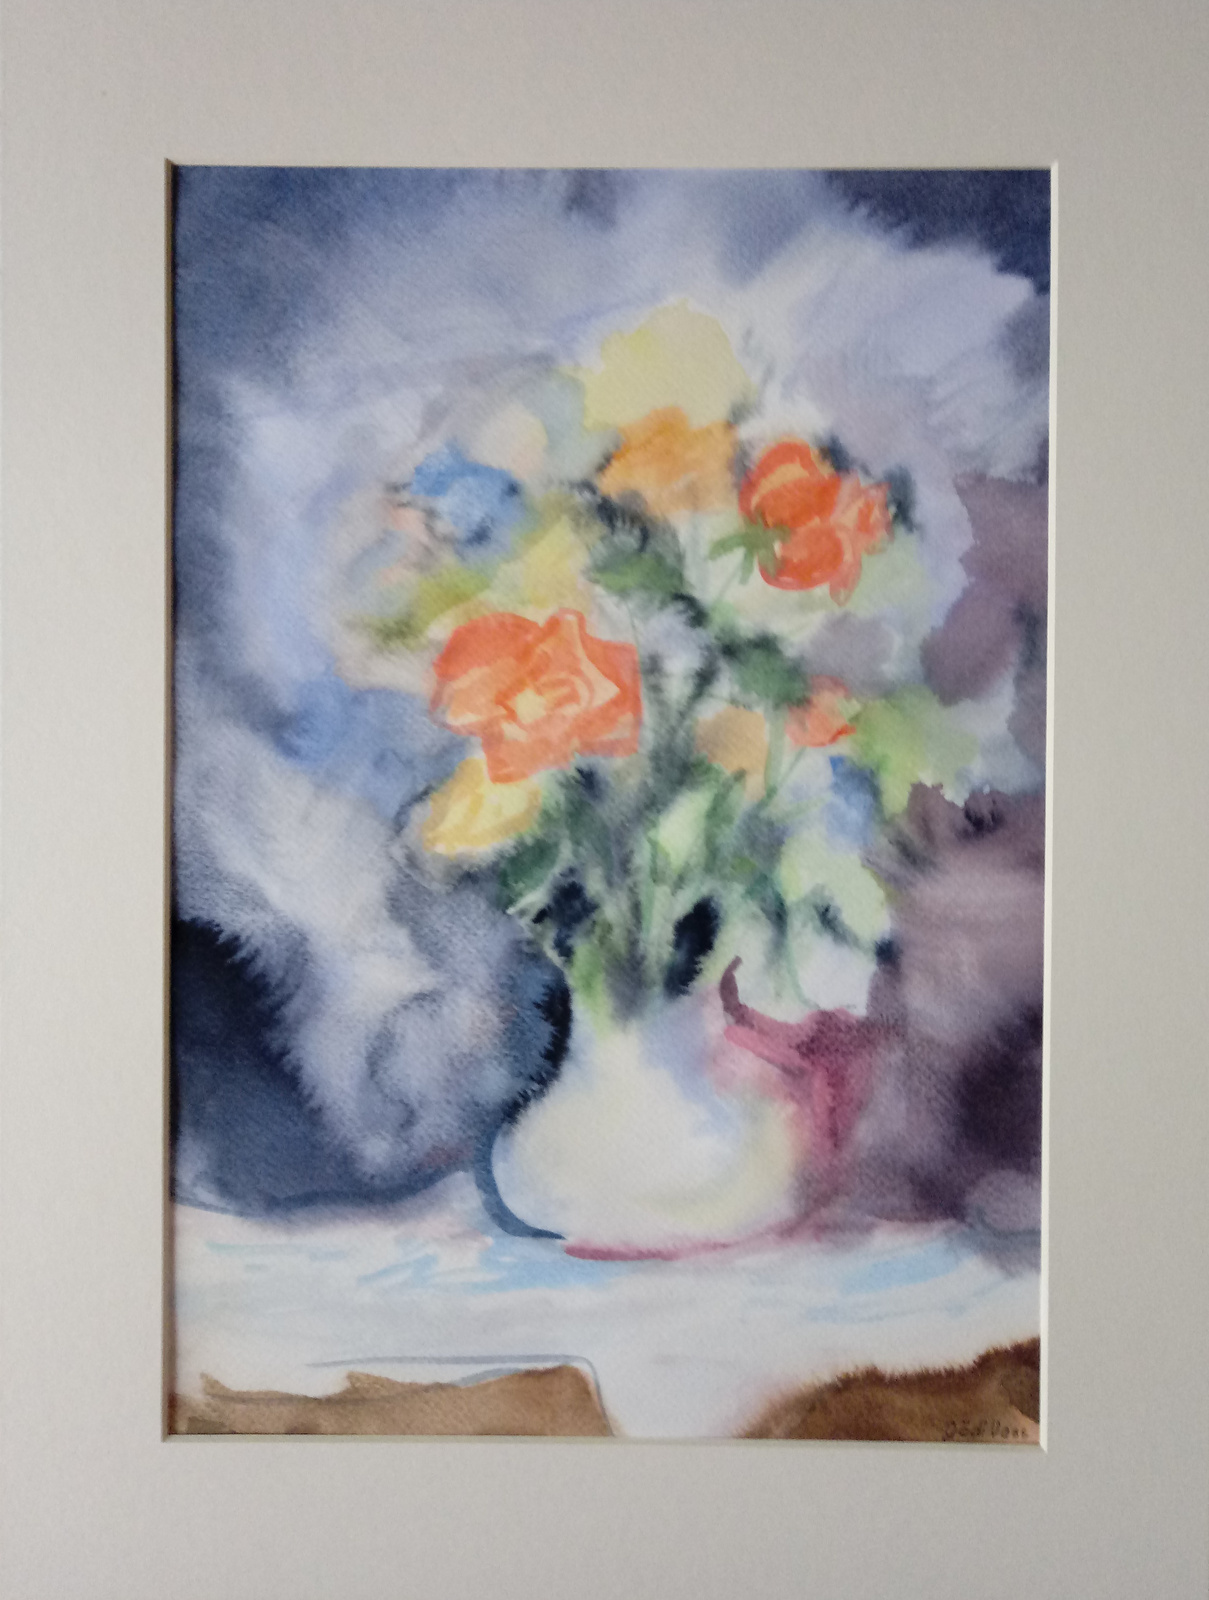 Virág-csend-élet. 34x23, aquarell. 2003